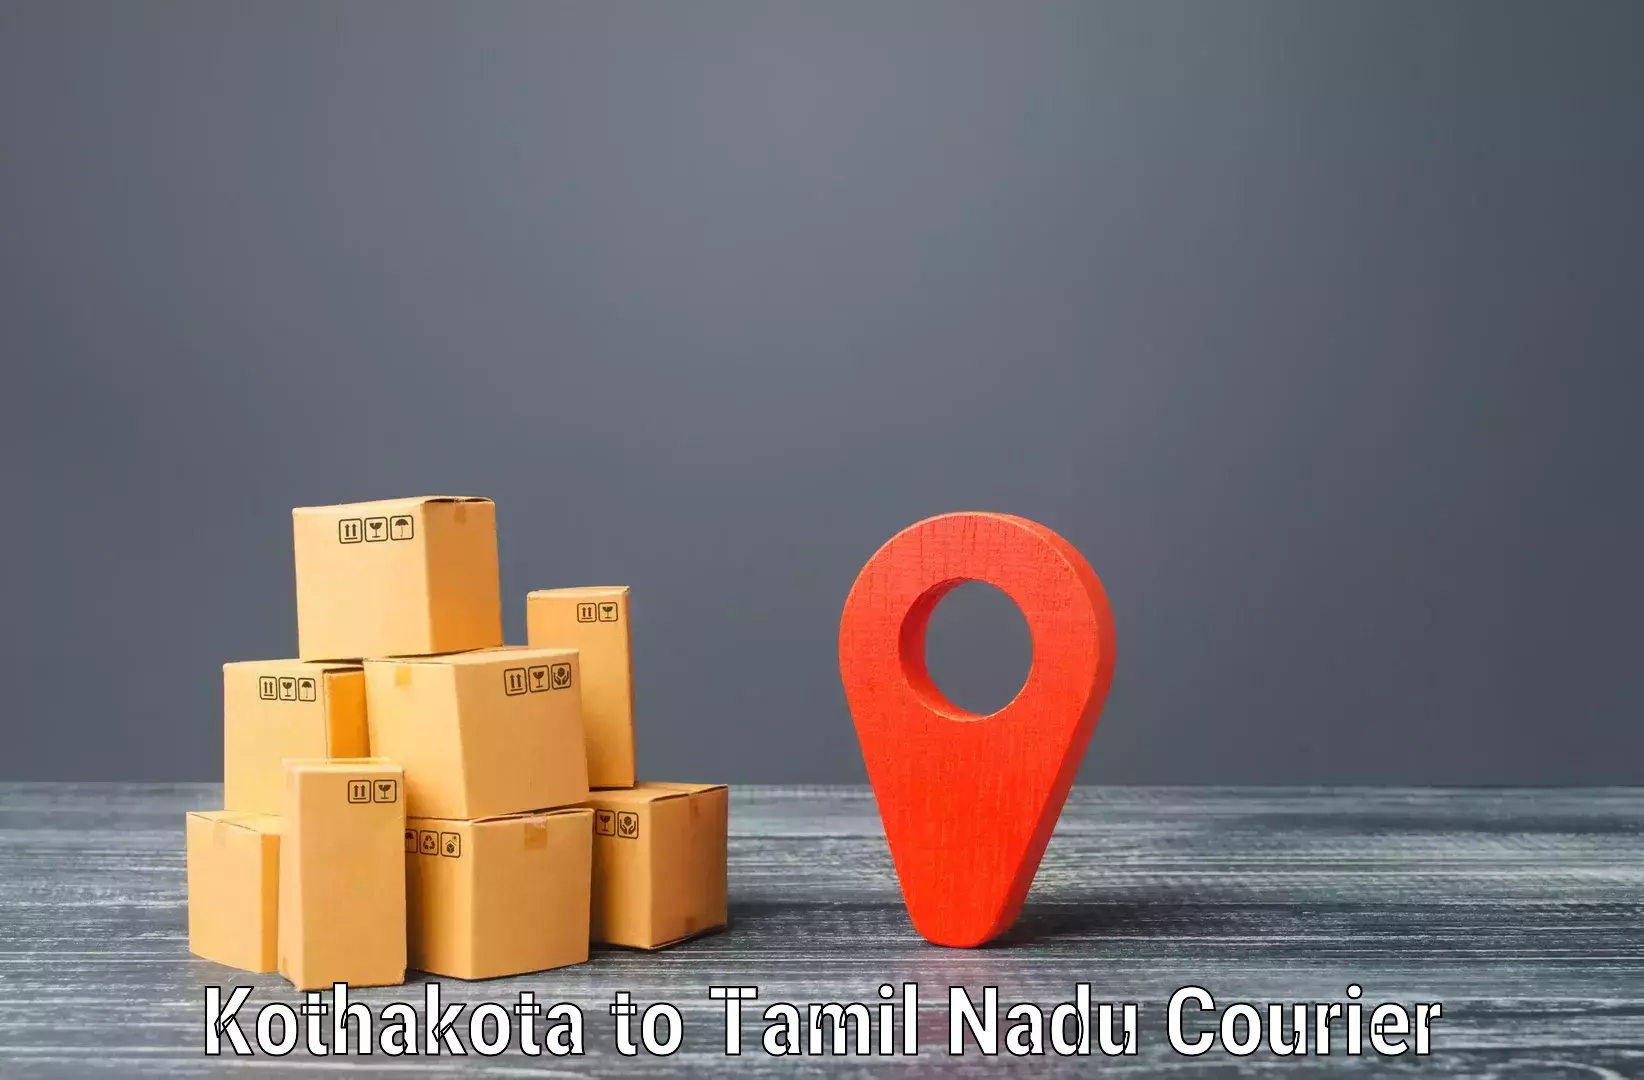 24-hour delivery options Kothakota to Nagapattinam